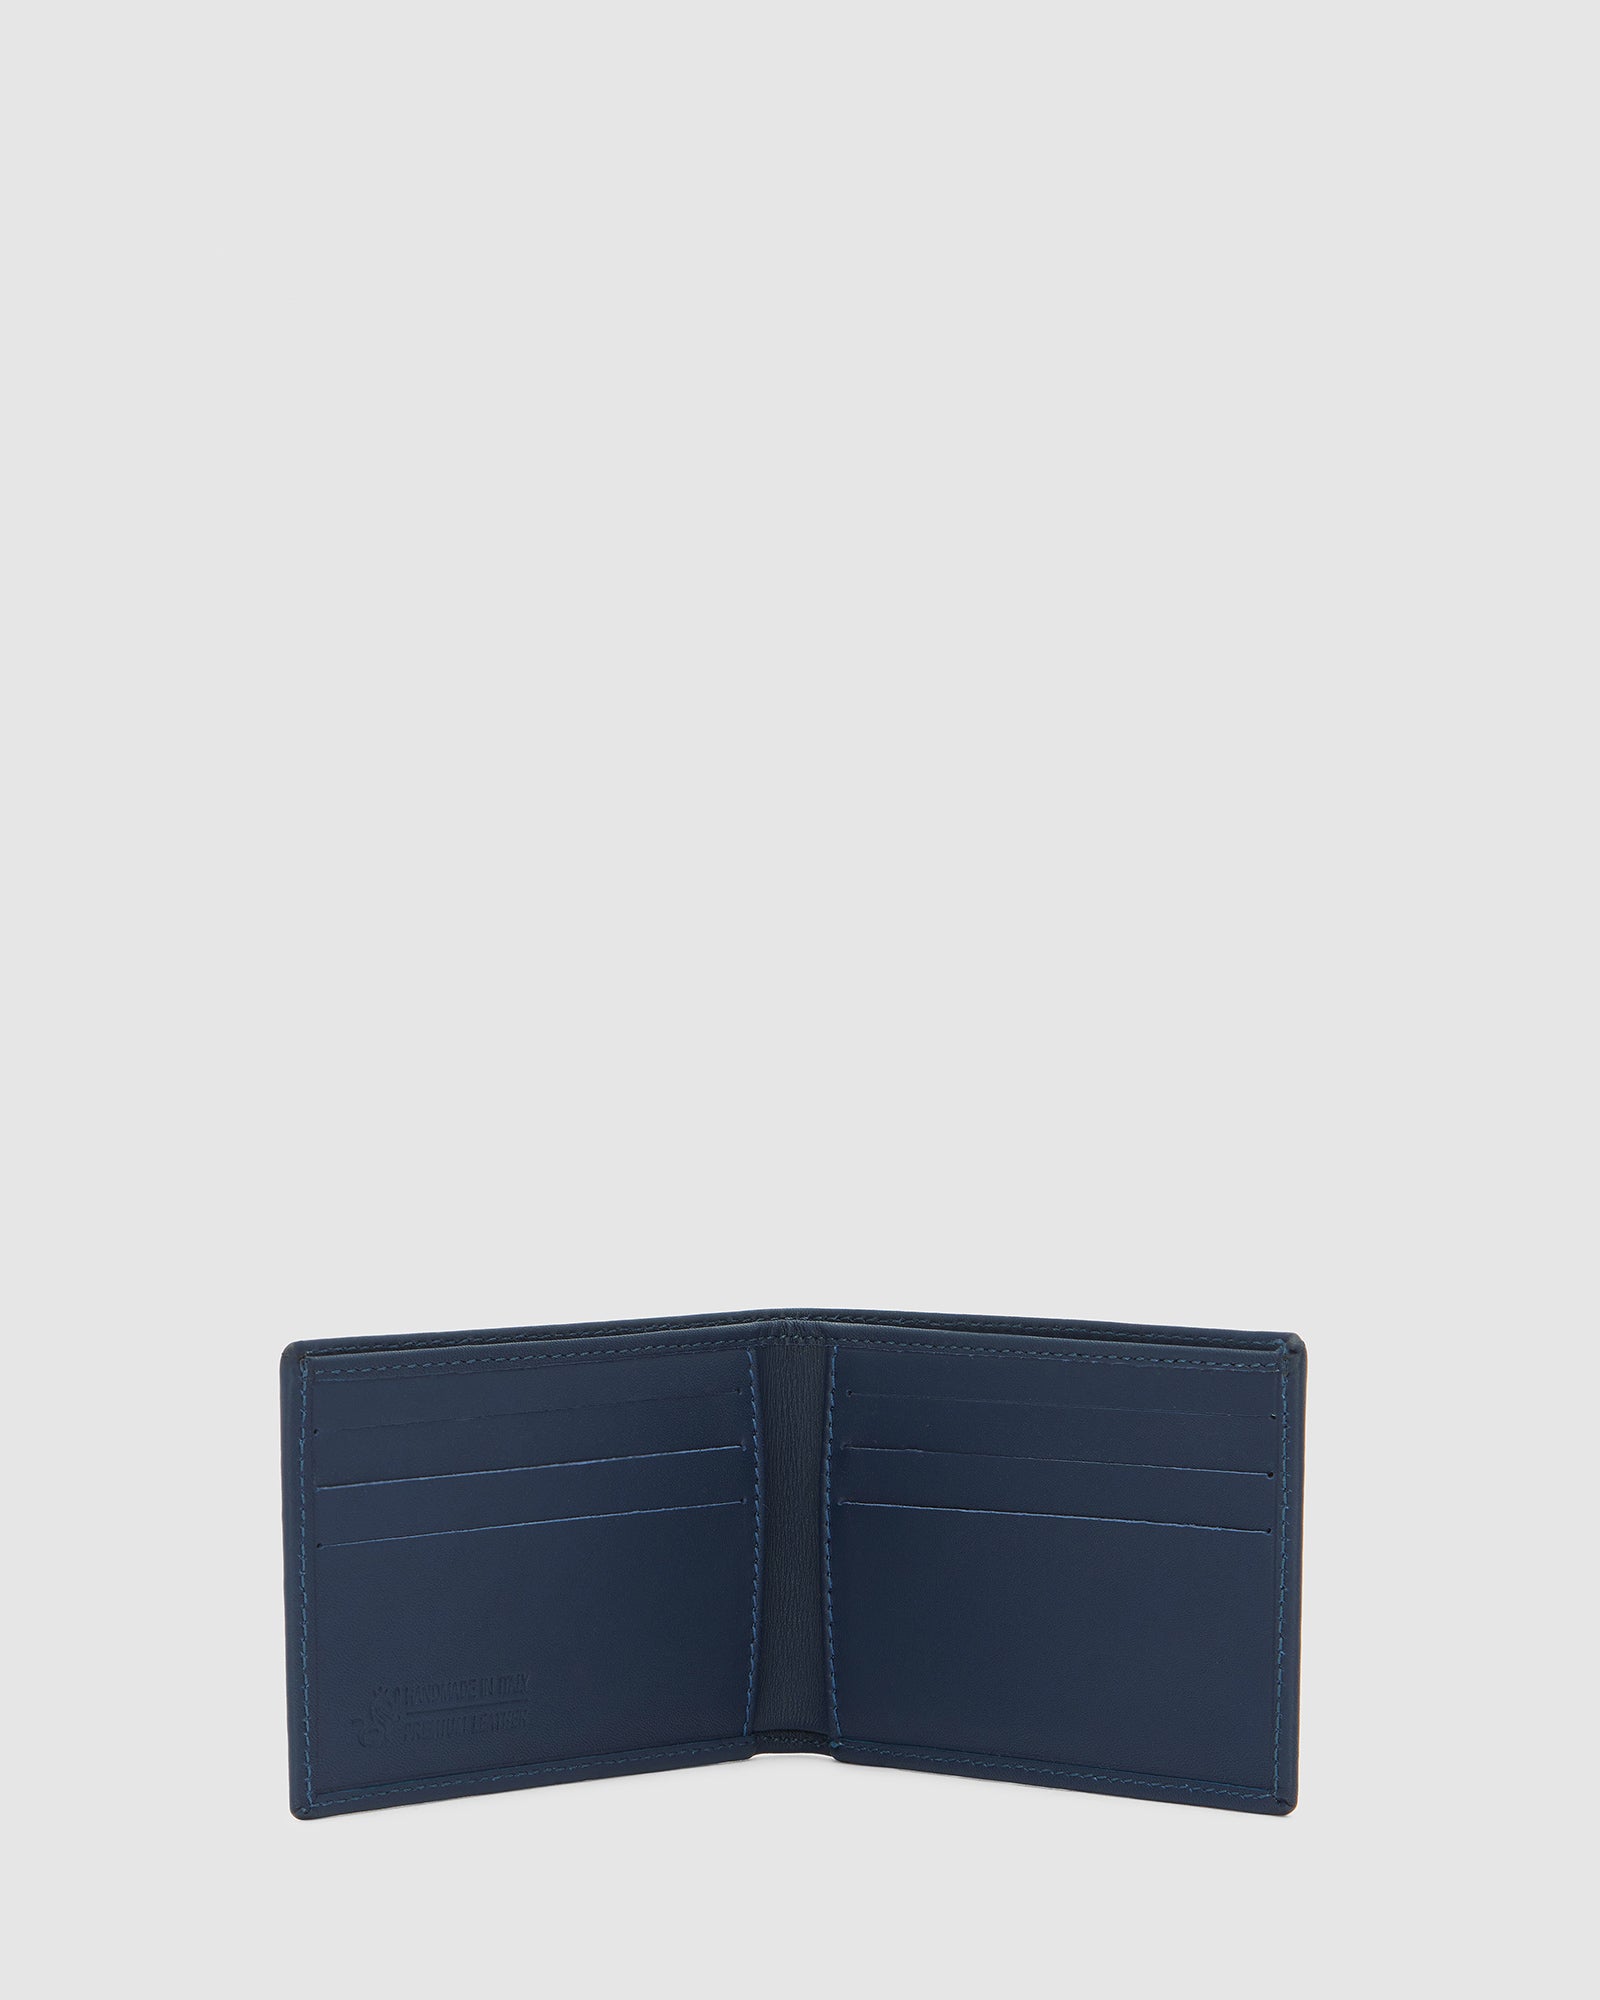 Vivaldi Blue  - Small Bifold Nappa Leather Wallet